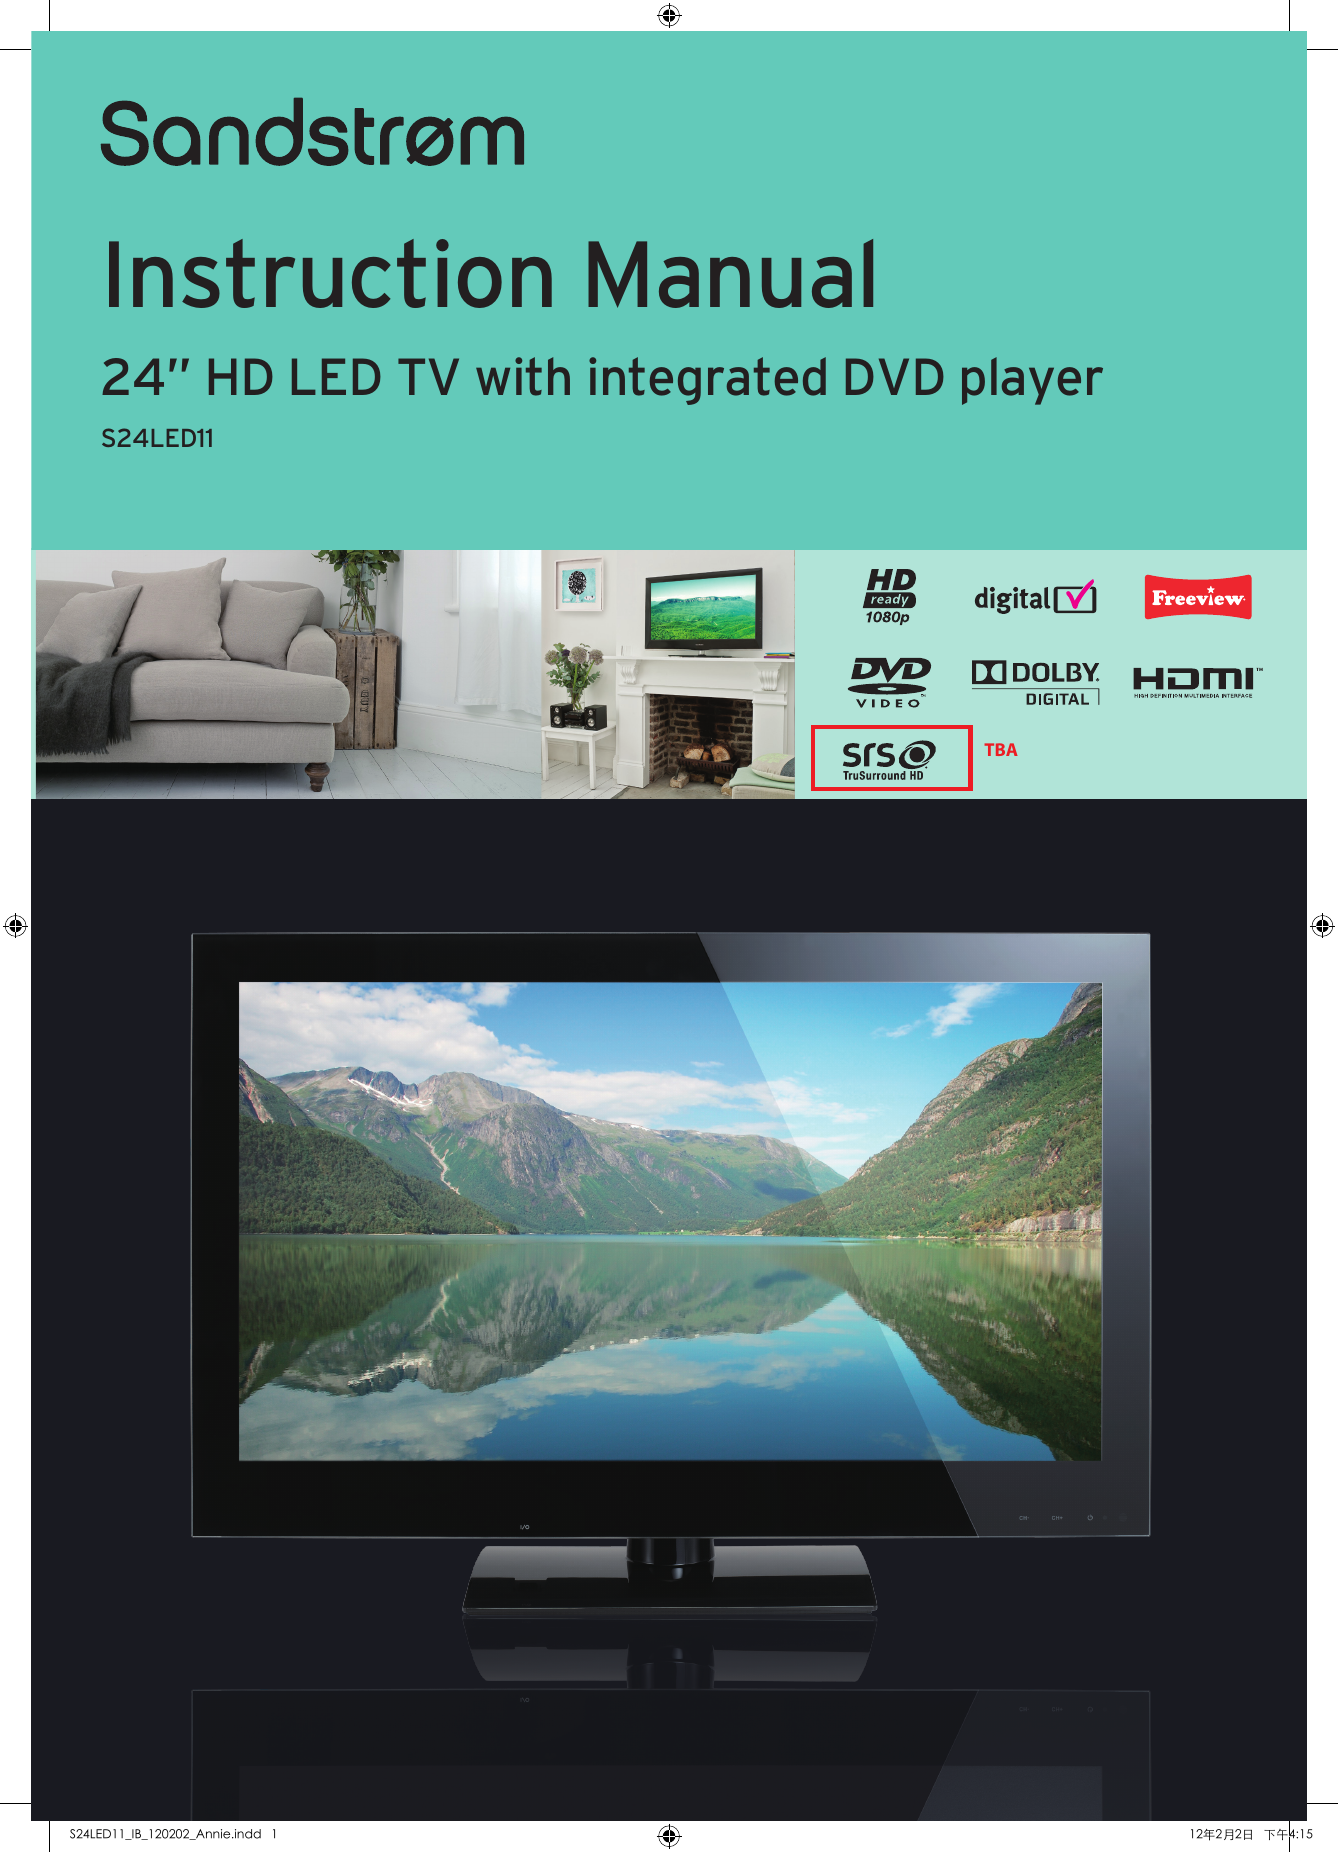 Sandstrom S24LED11 Instruction Manual | Manualzz